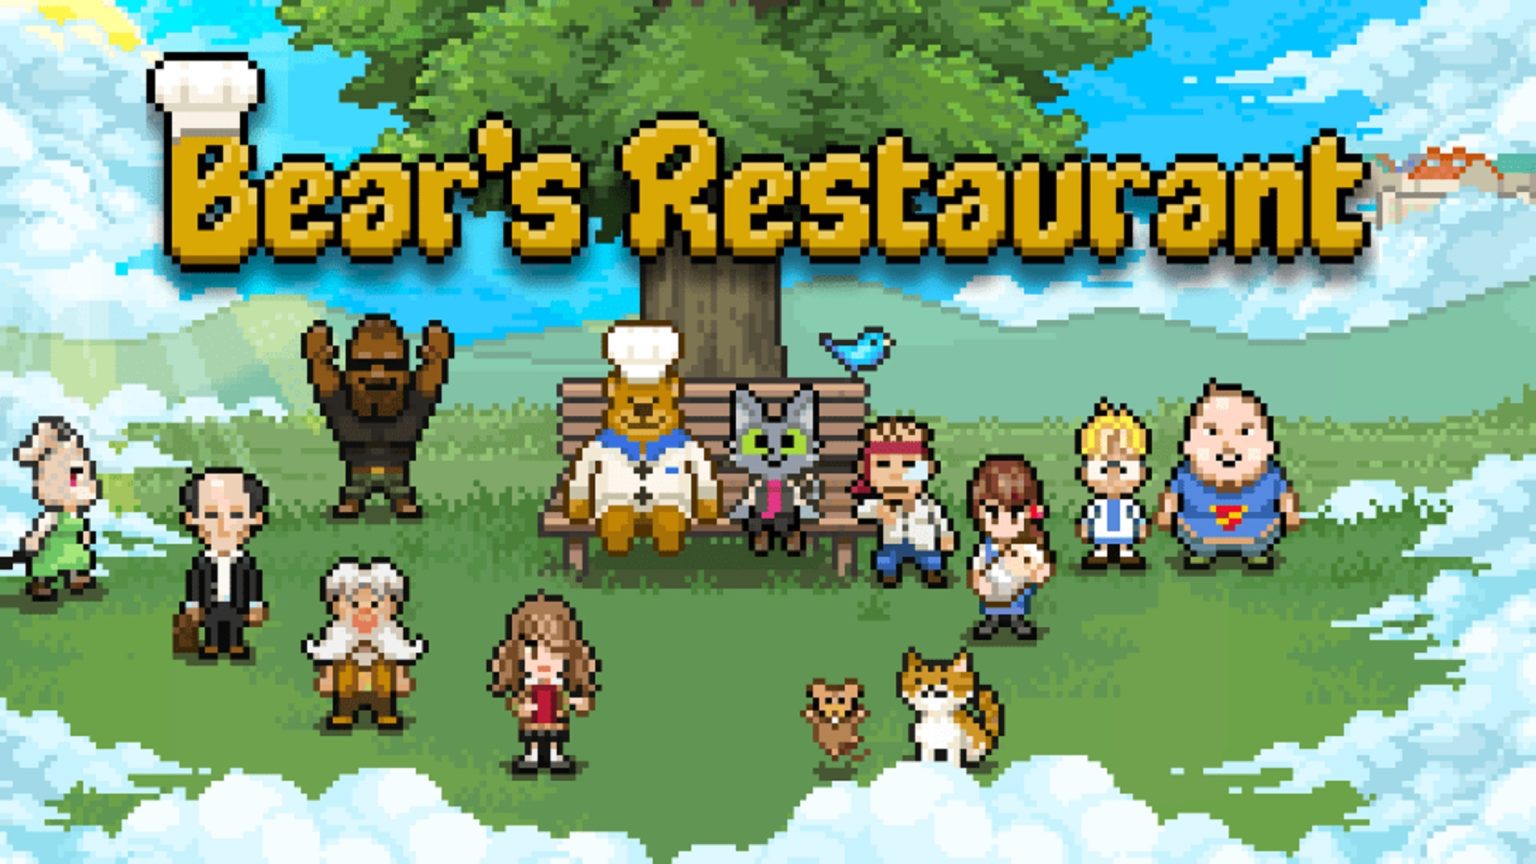 Bear Restaurant download the last version for windows